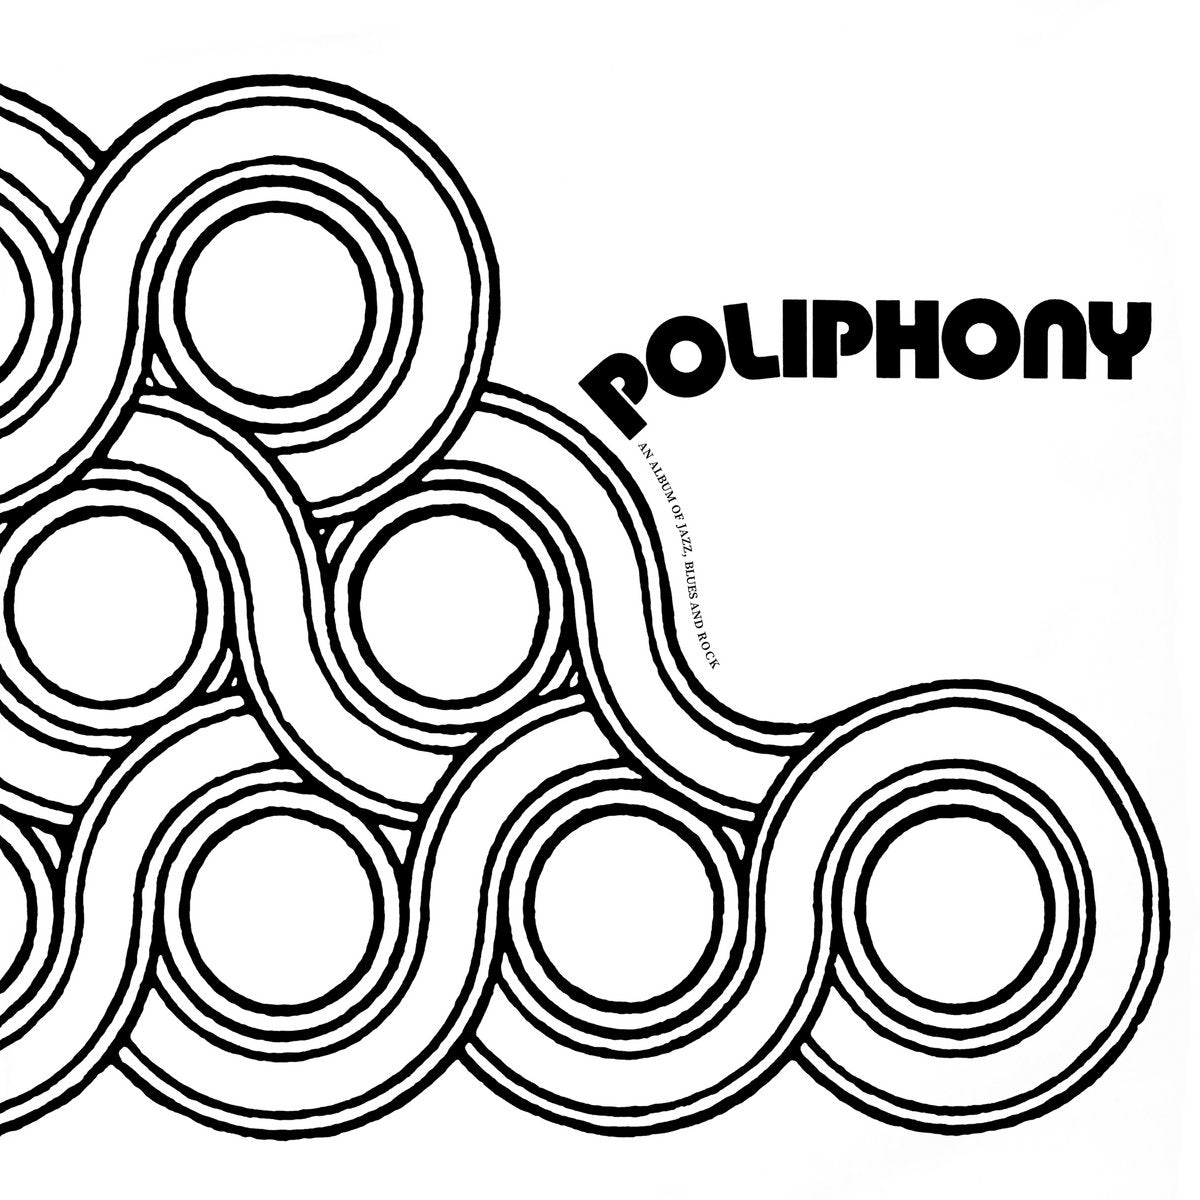 Poliphony – Poliphony